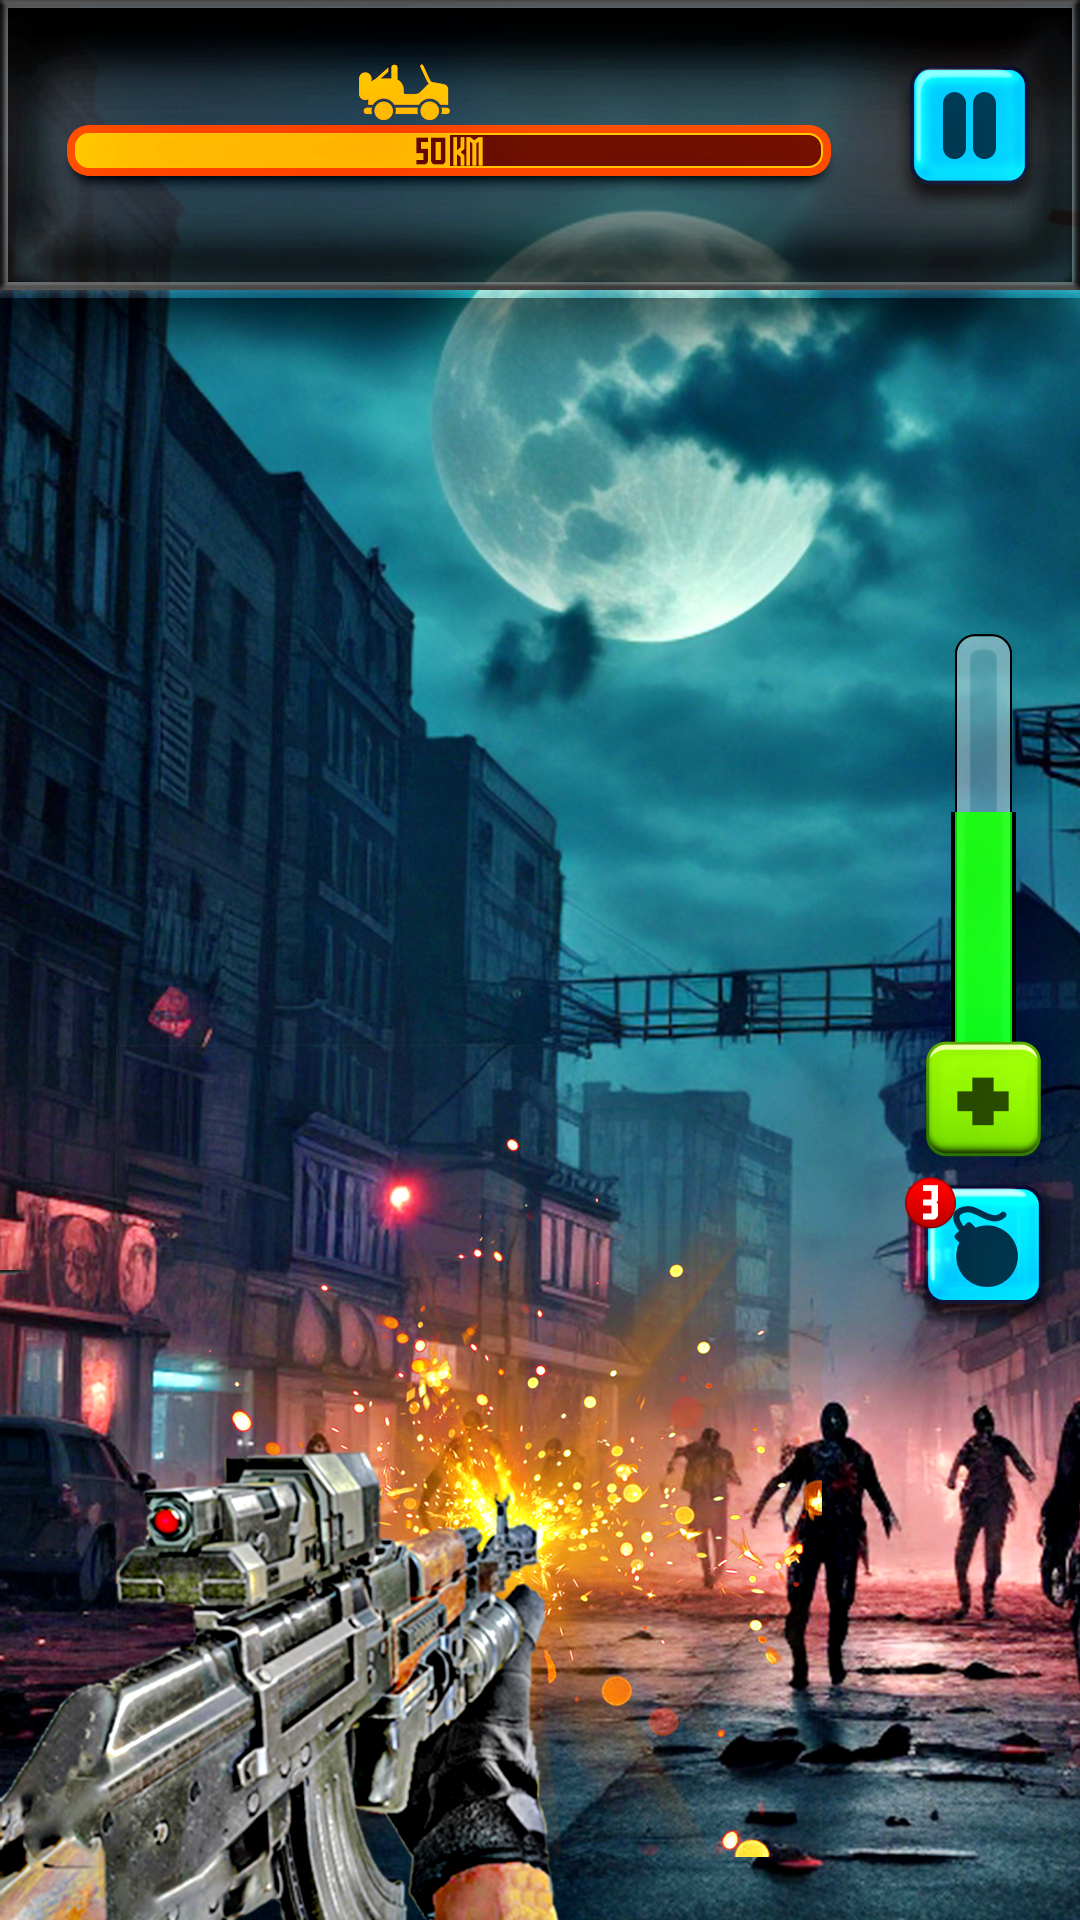 Prepare-se para o apocalipse: 5 jogos de zumbis – Android-Apps auf